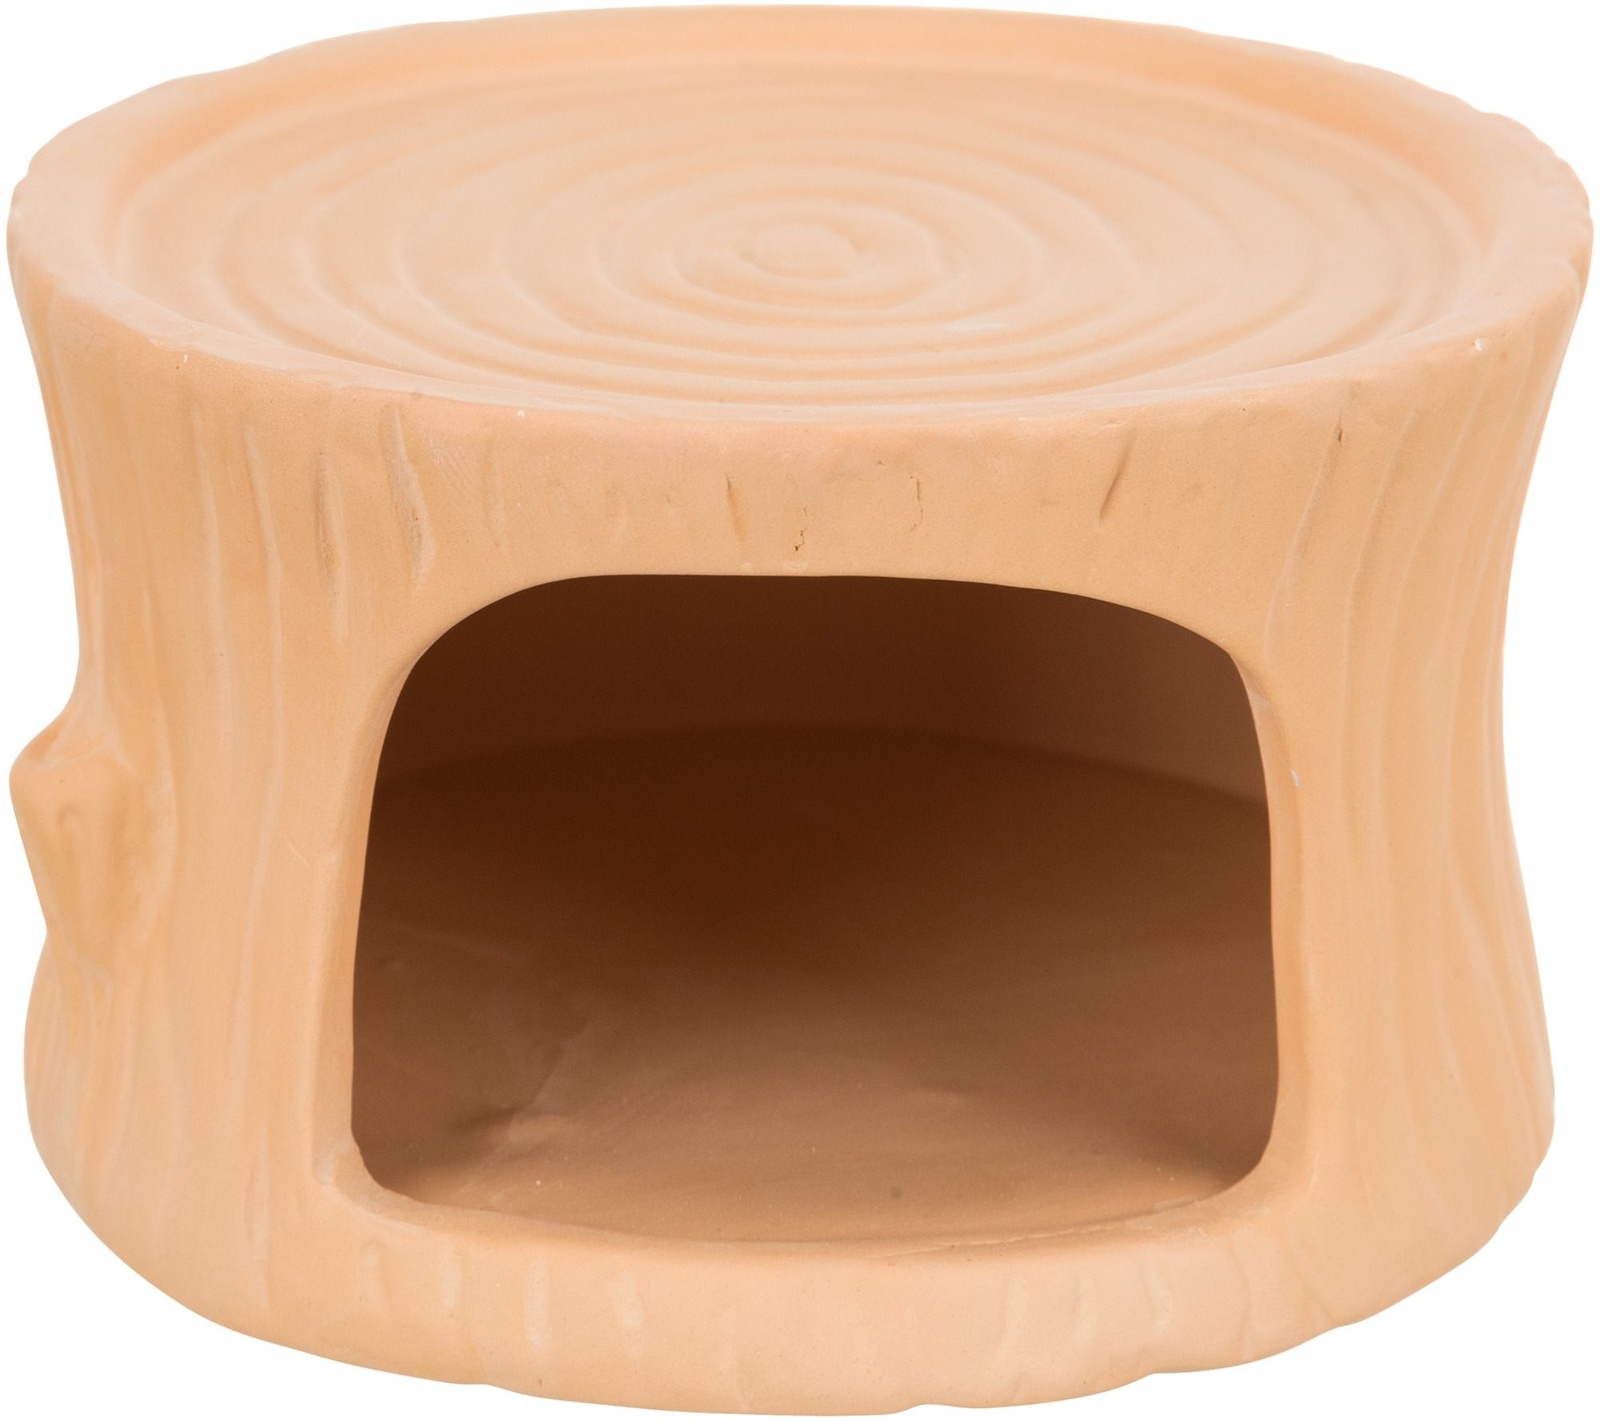 Trixie Trixie домик для мышей и хомяков, керамика, 11 x 6 x 10 см, терракотовый (275 г) аромалампа домик 10 см керамика